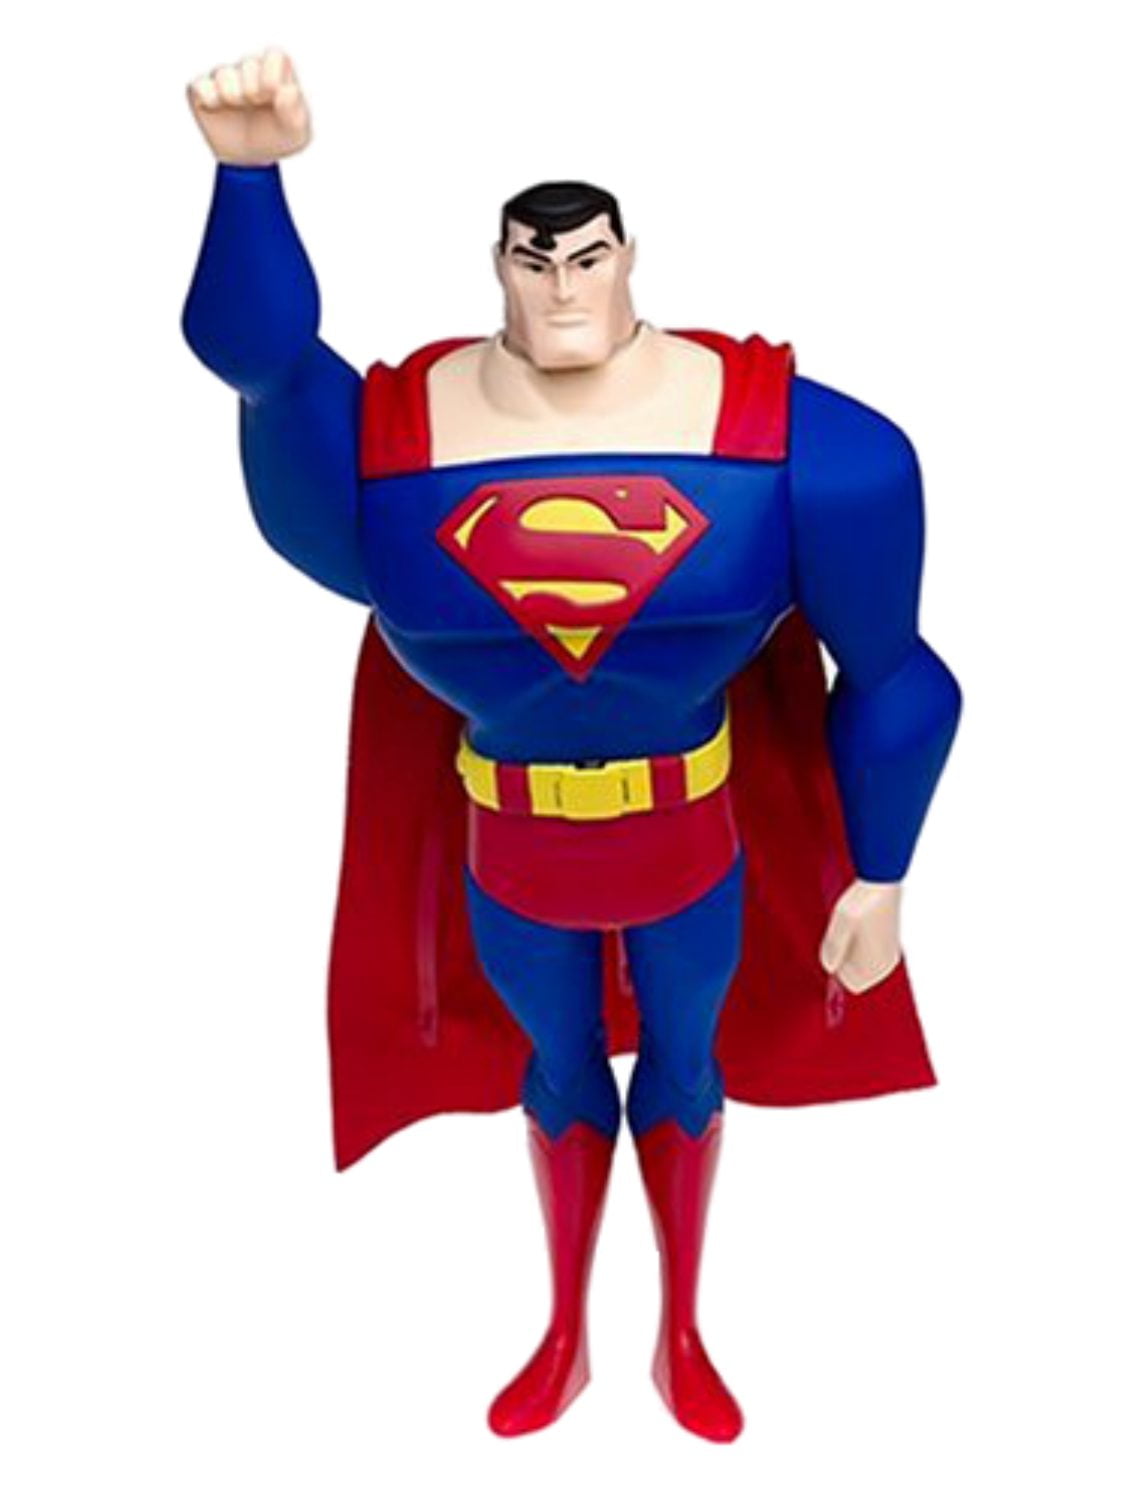 superman action figure walmart